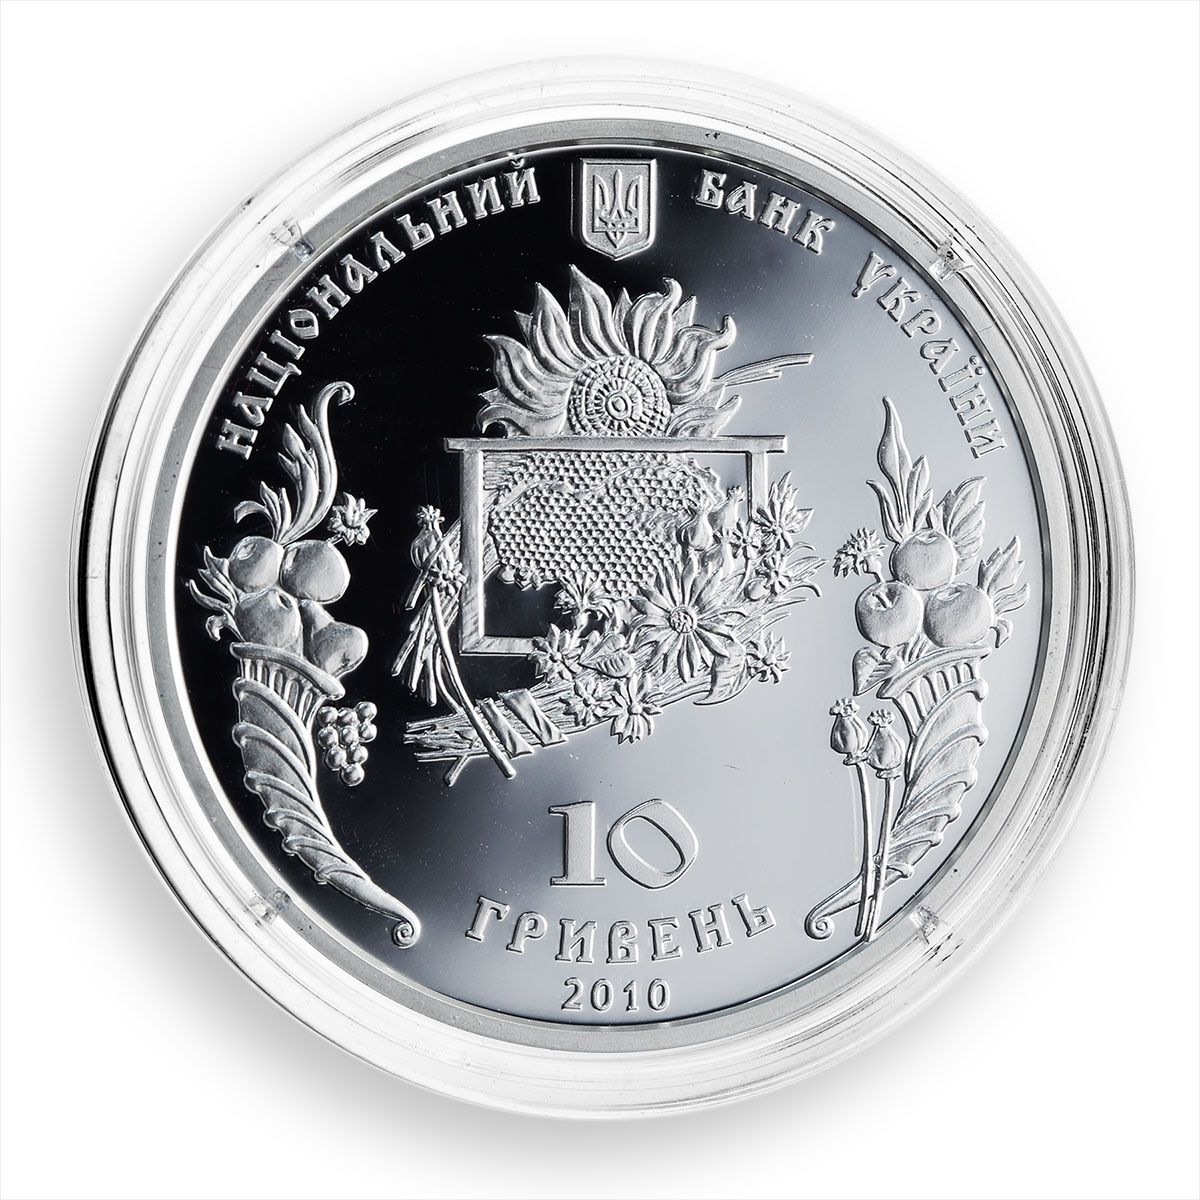 Ukraine 10 hryvnia Spas Orthodox Feast Ritual Holidays silver proof coin 2010